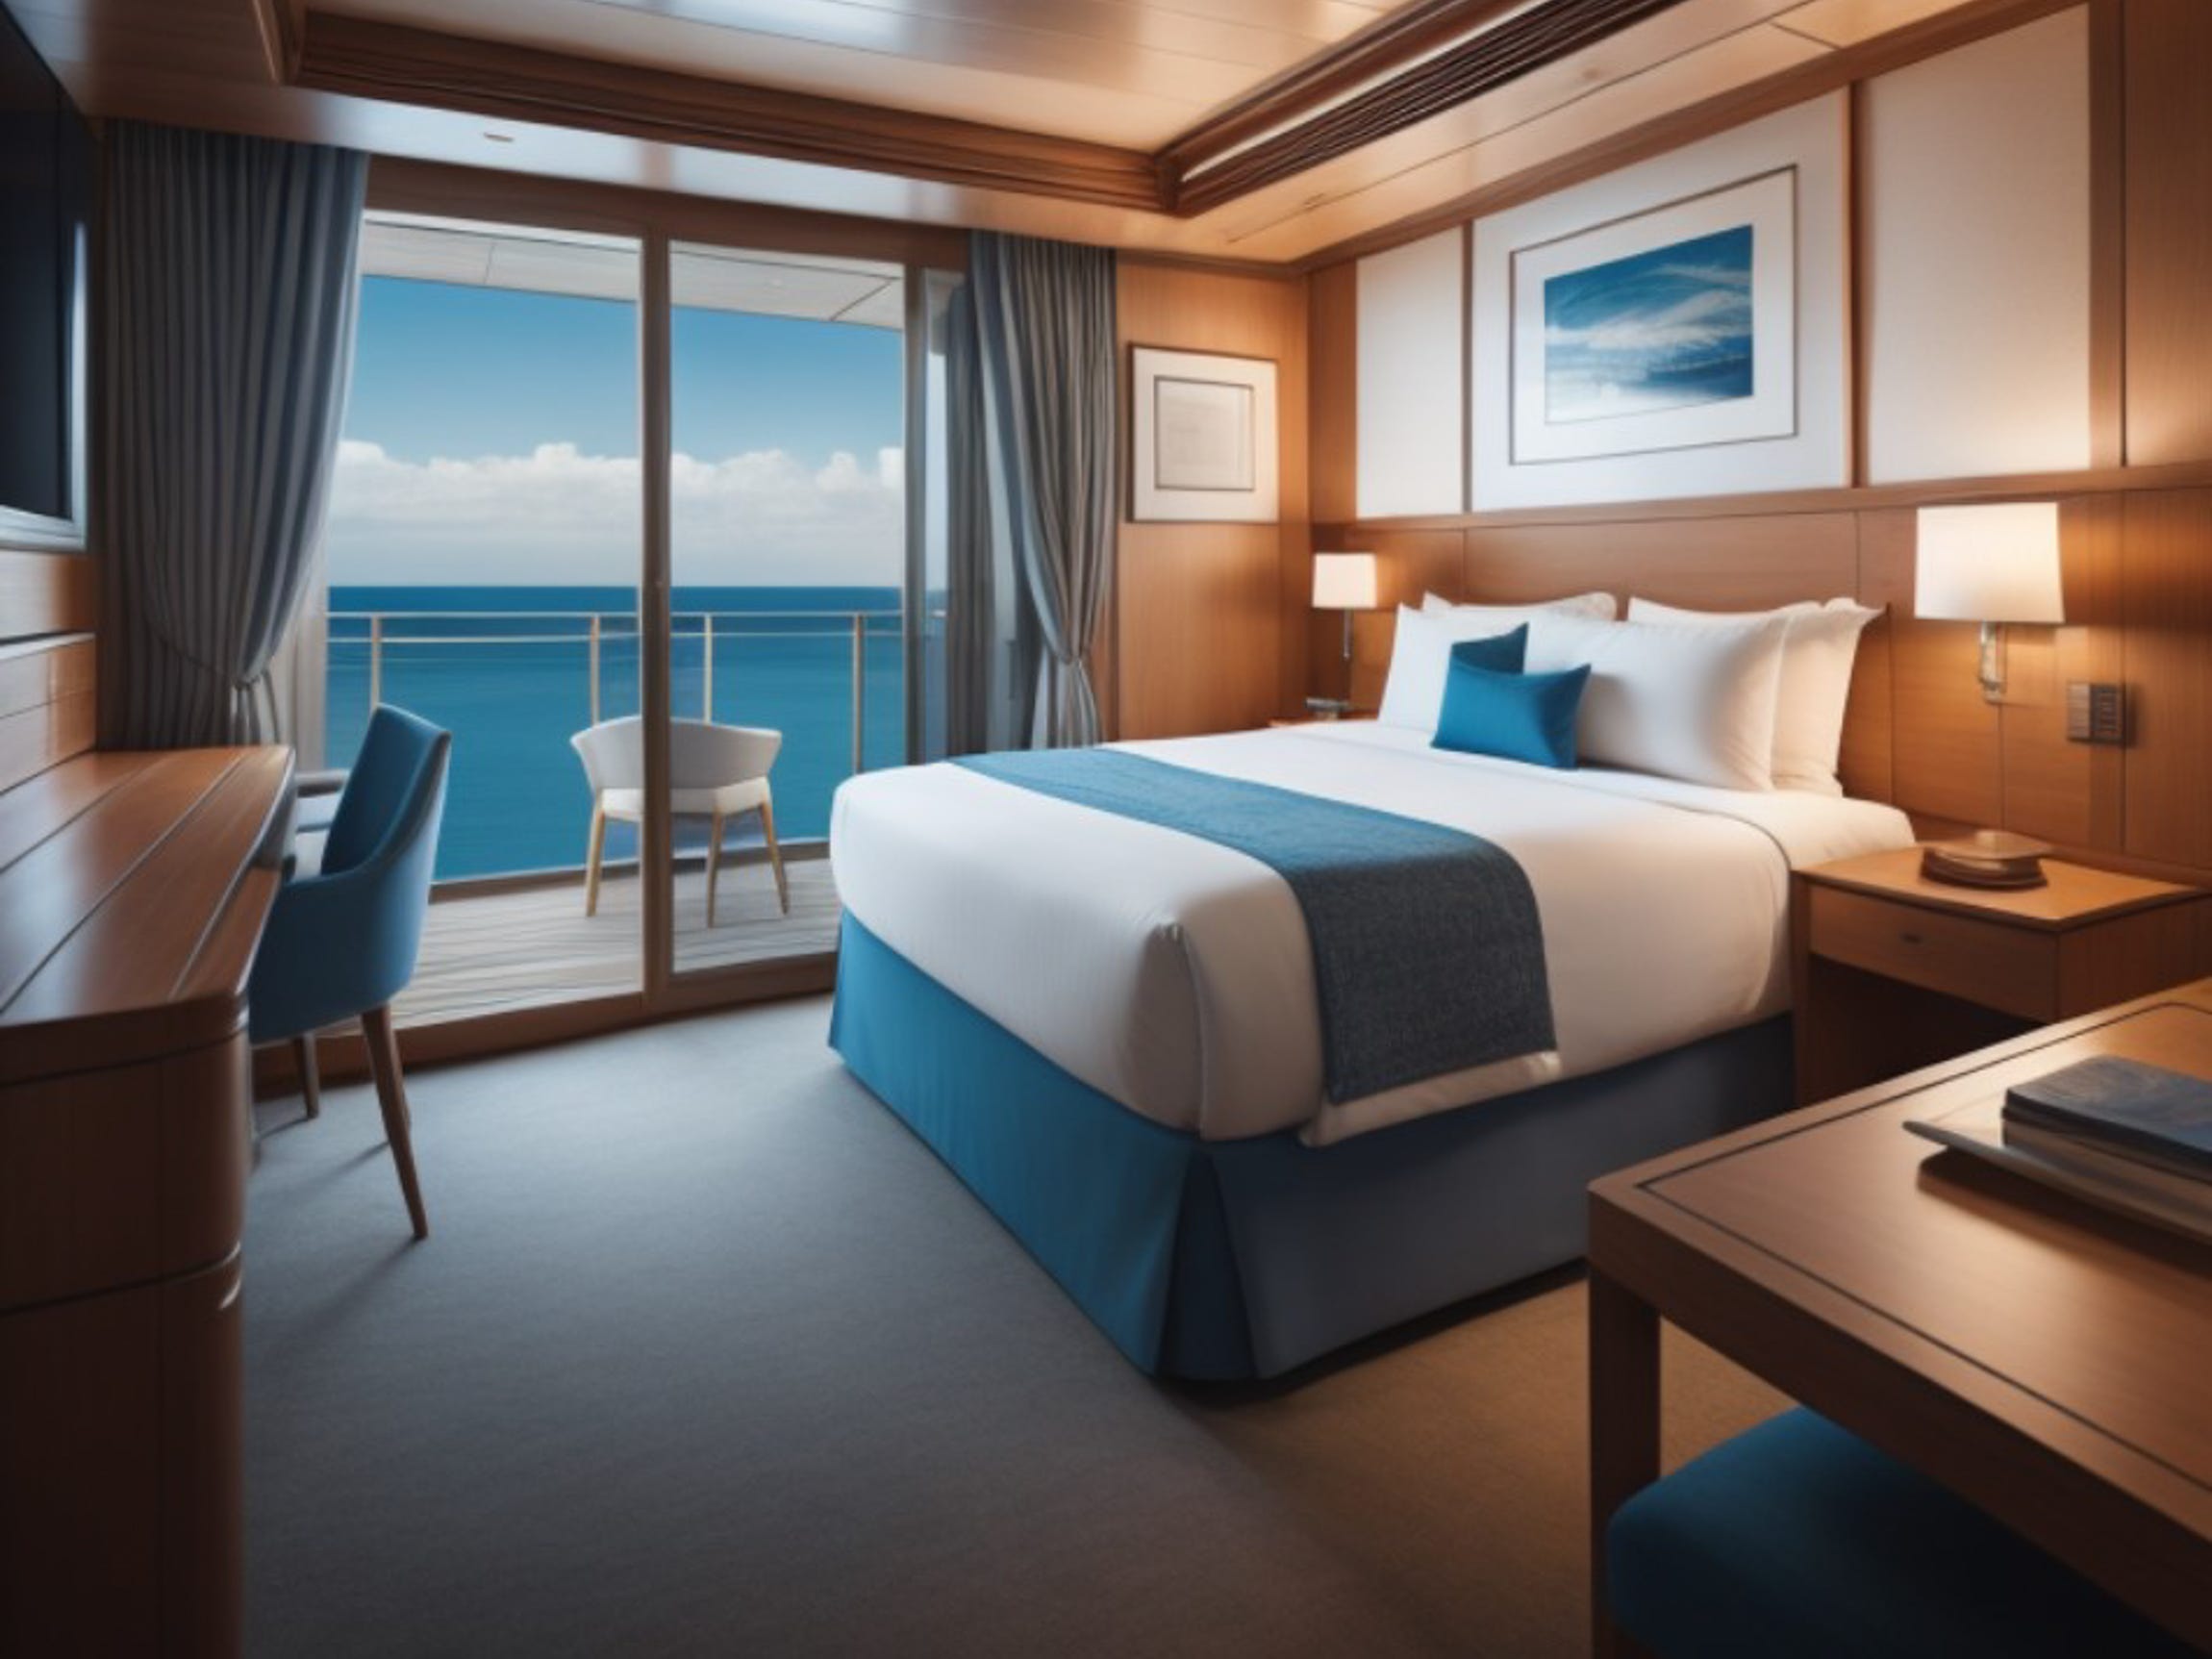 A balcony cabin rendering on Villa Vie's upcoming cruise ship